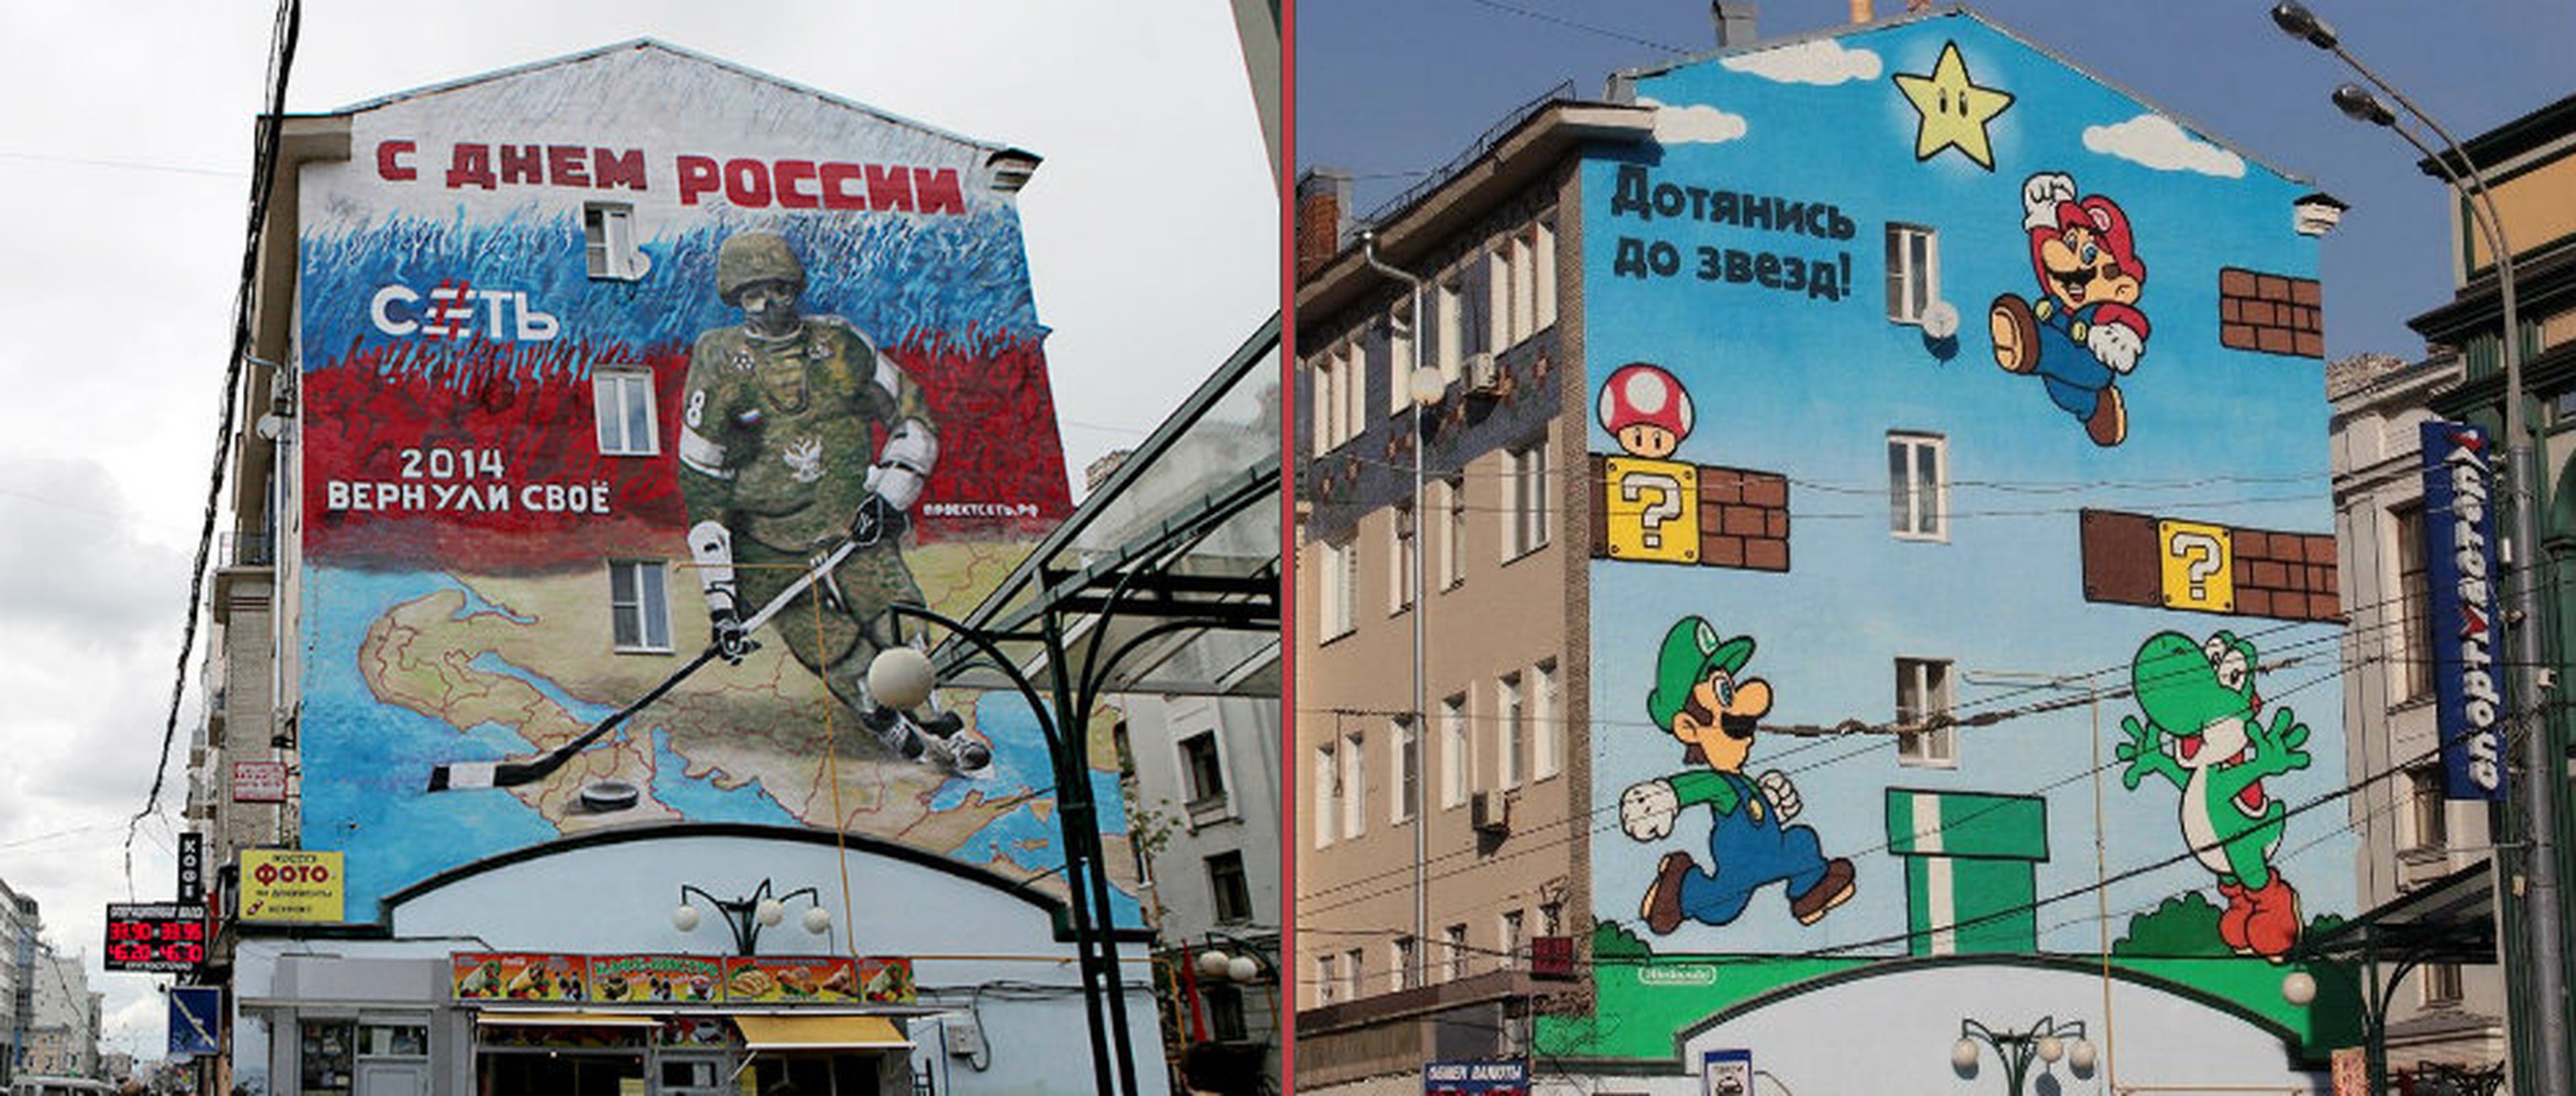 Un mural de Mario Bros en Crimea a favor de la paz